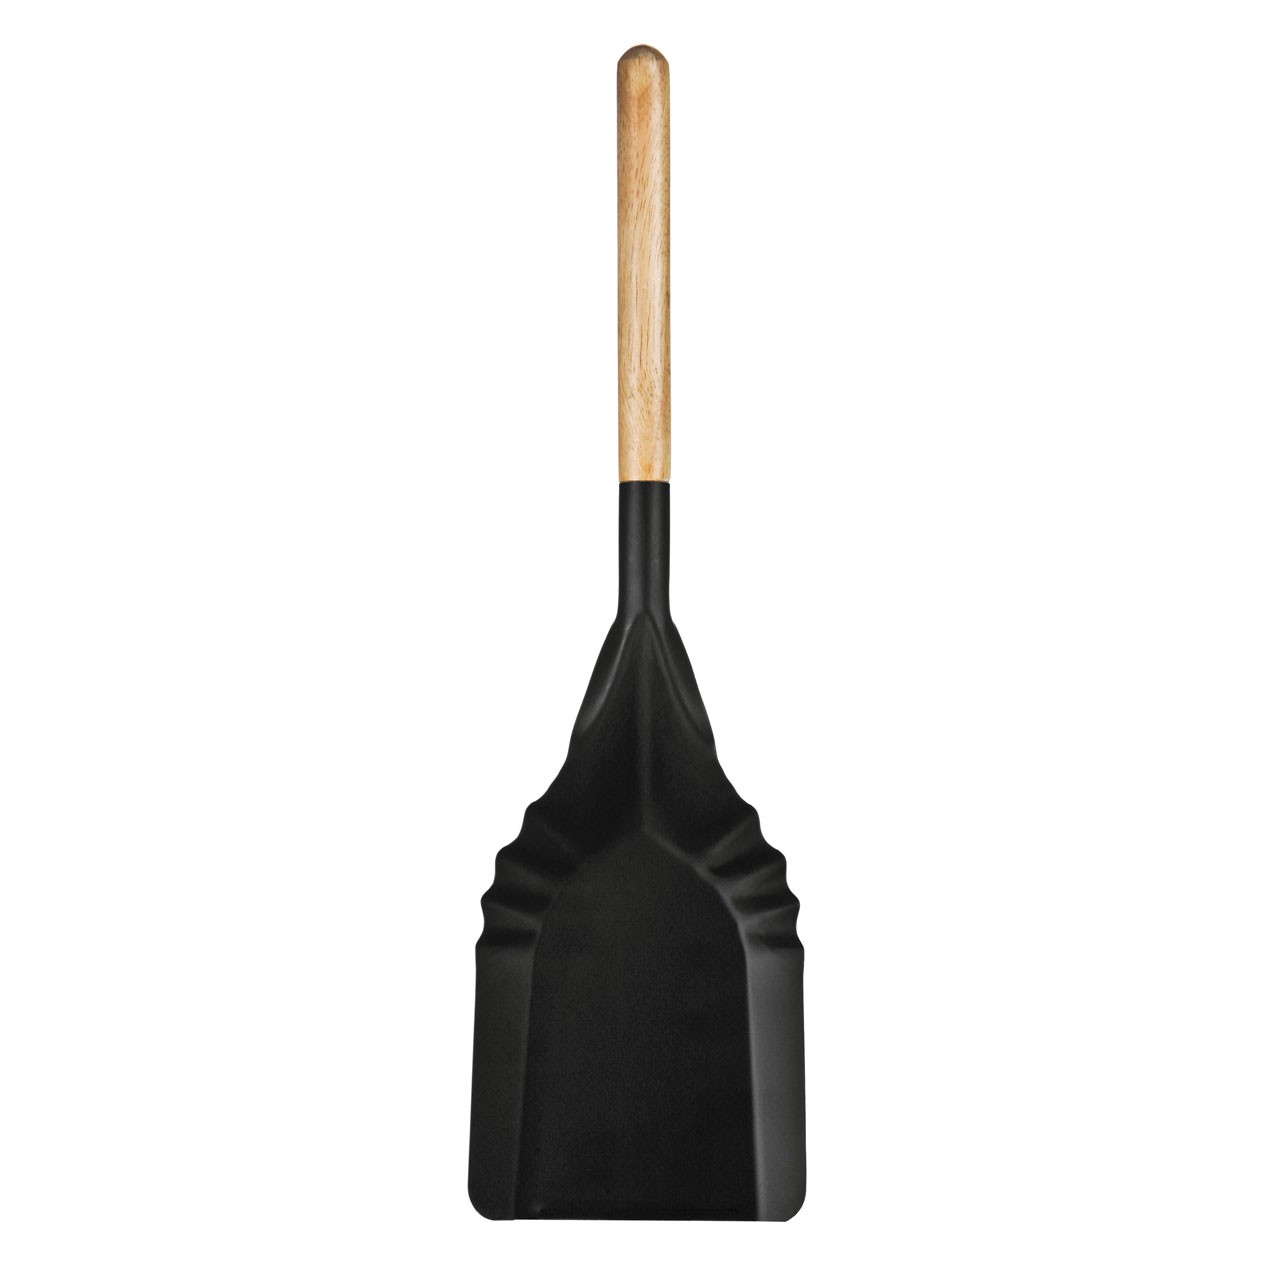 Prime Furnishing Black Shovel With Wooden Handle